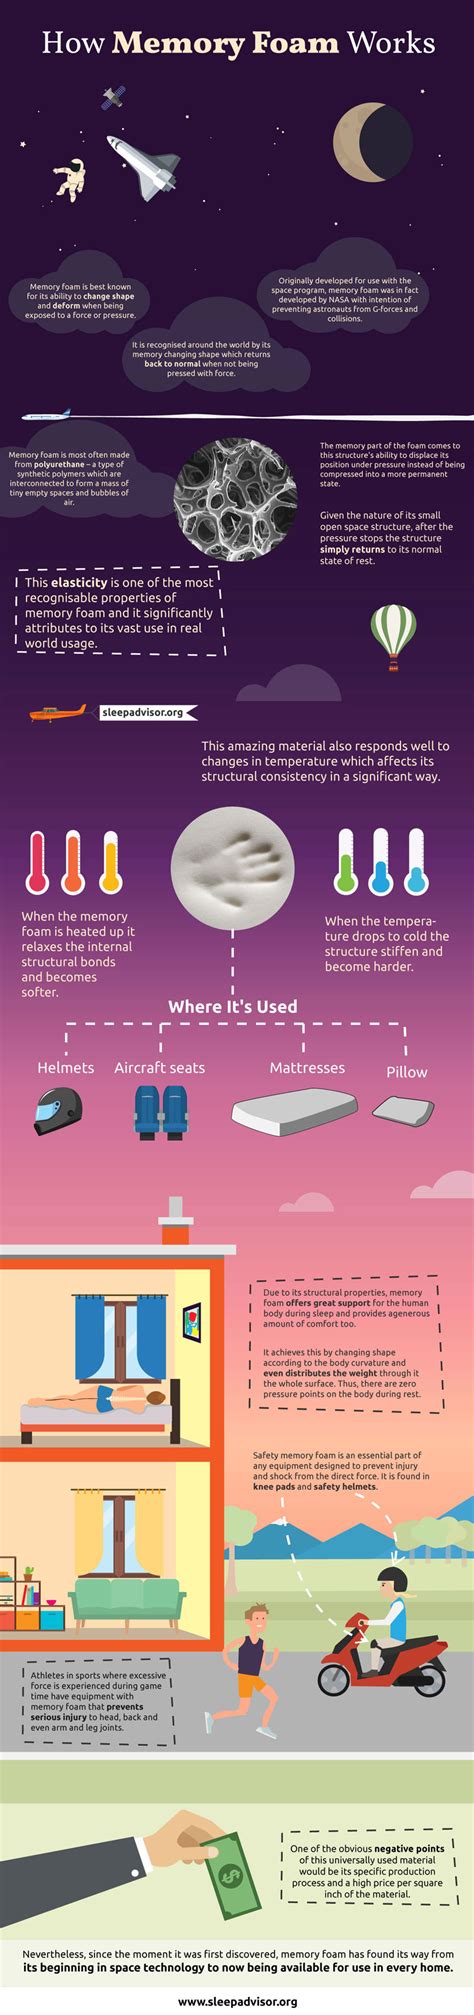 memory foam works infographic sleep advisor